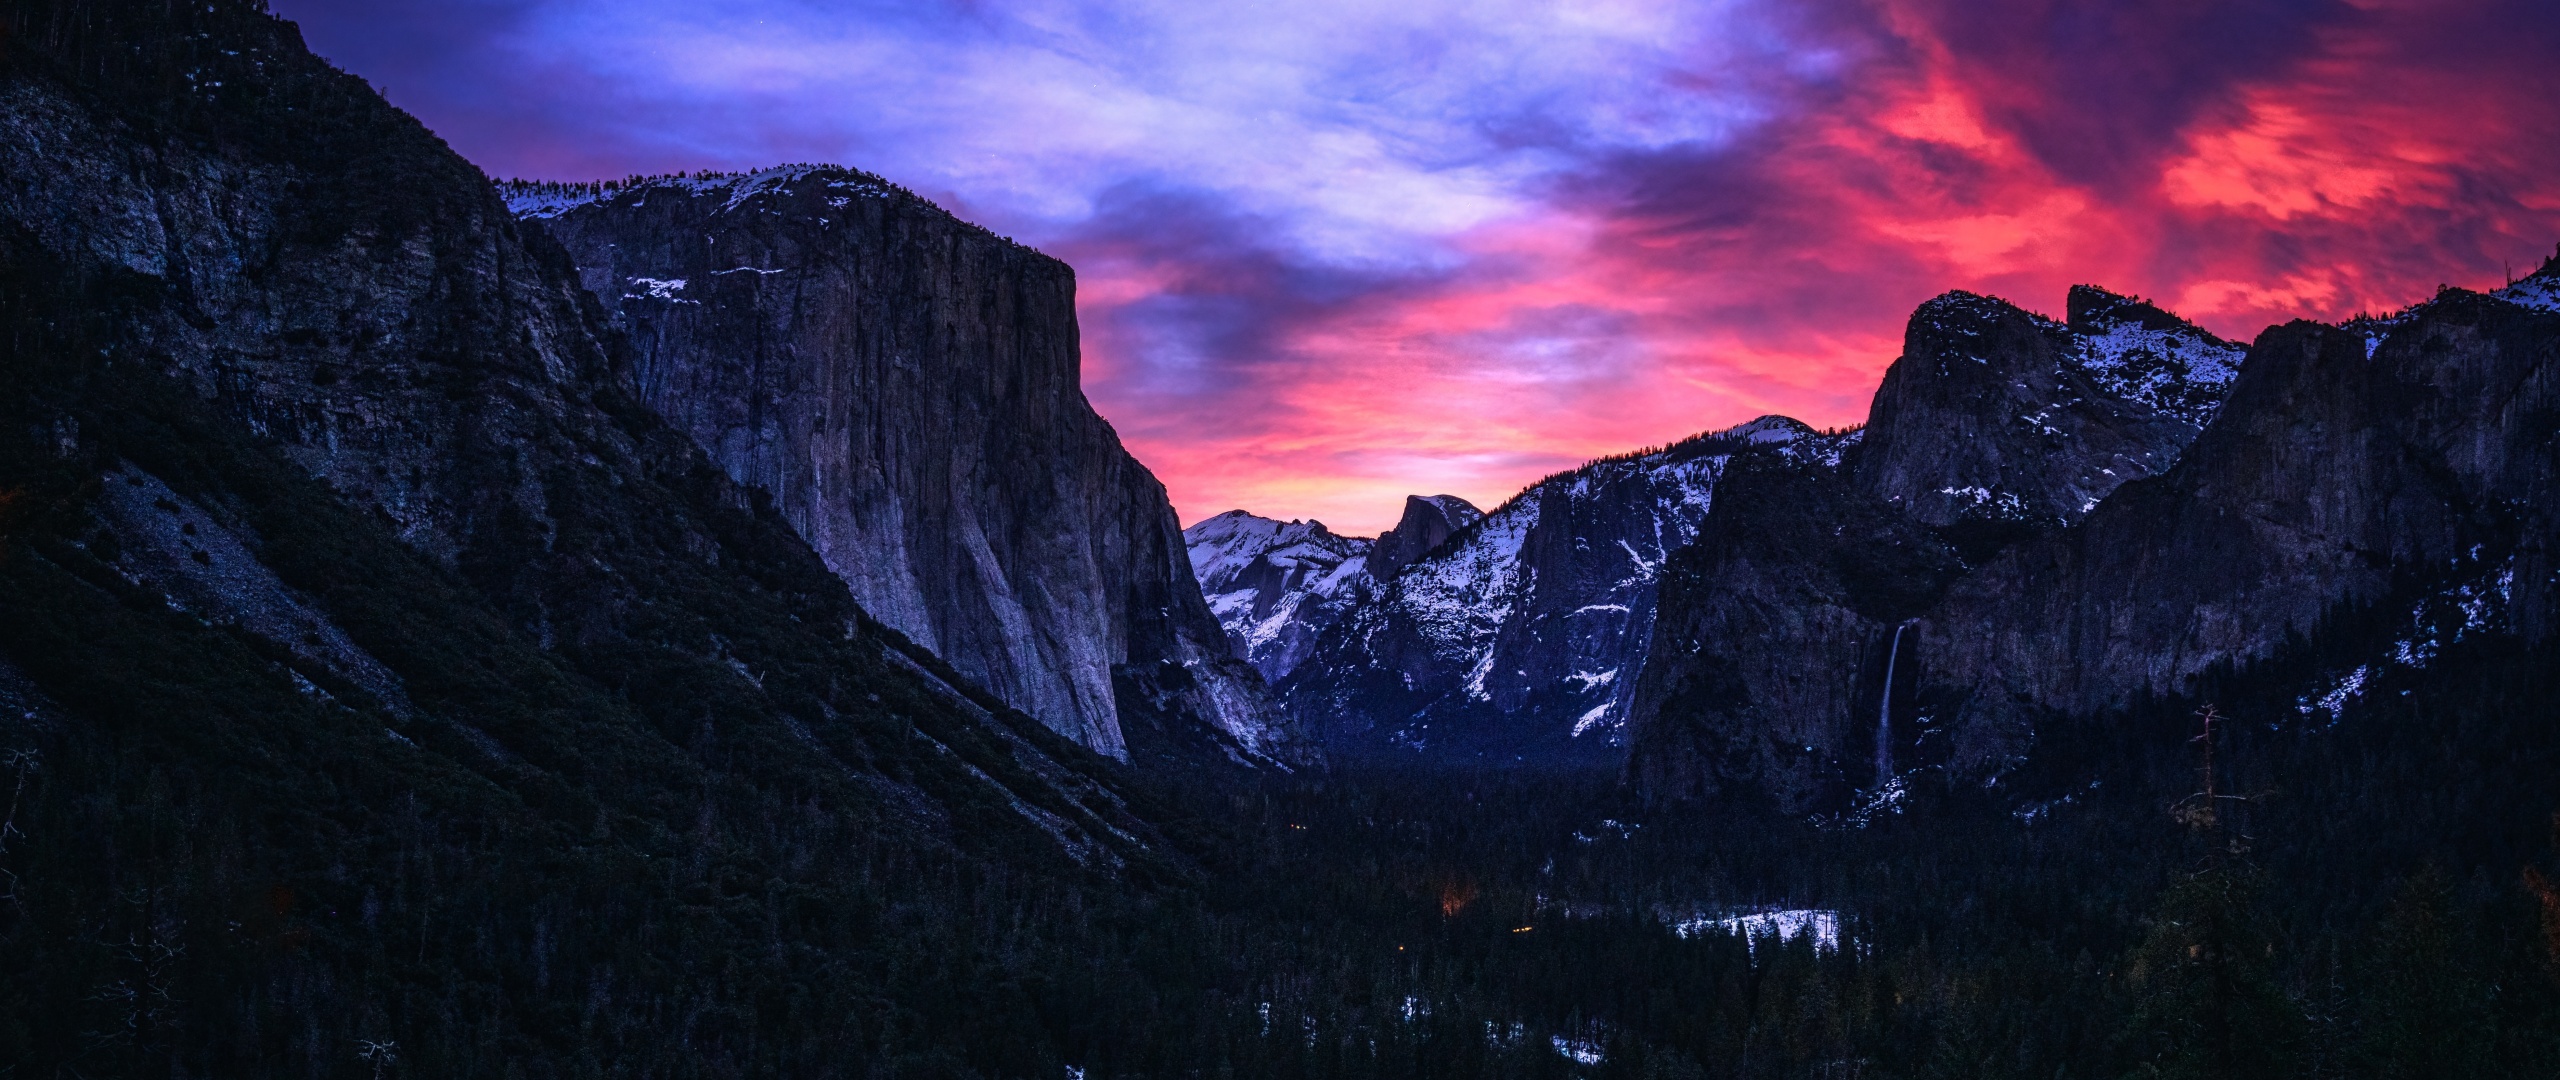 Hình nền Yosemite quốc gia 4K: \